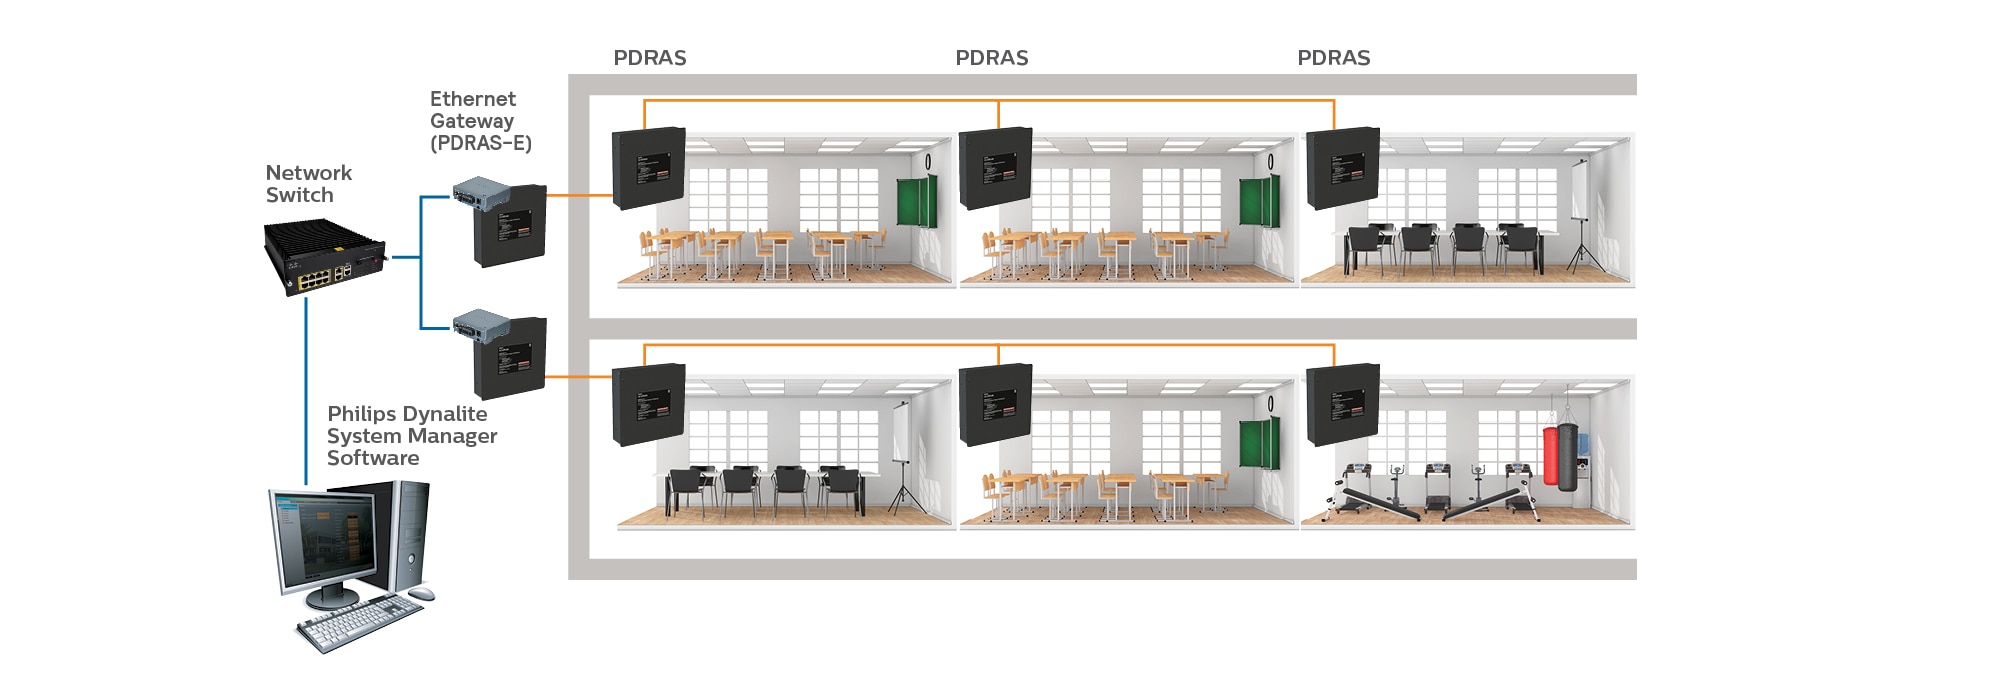 pdras for multiple room layout